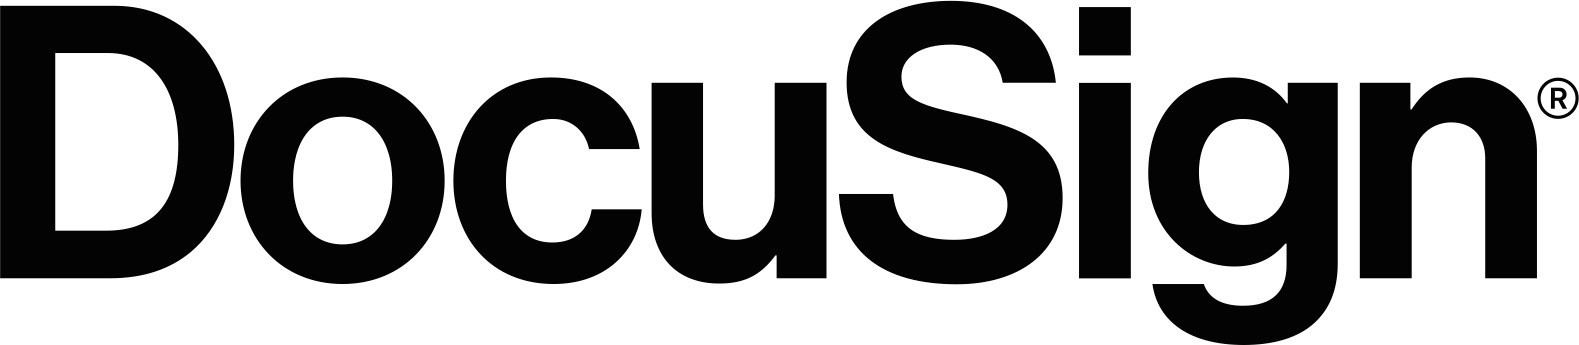 Docusign logo - Portal Integration